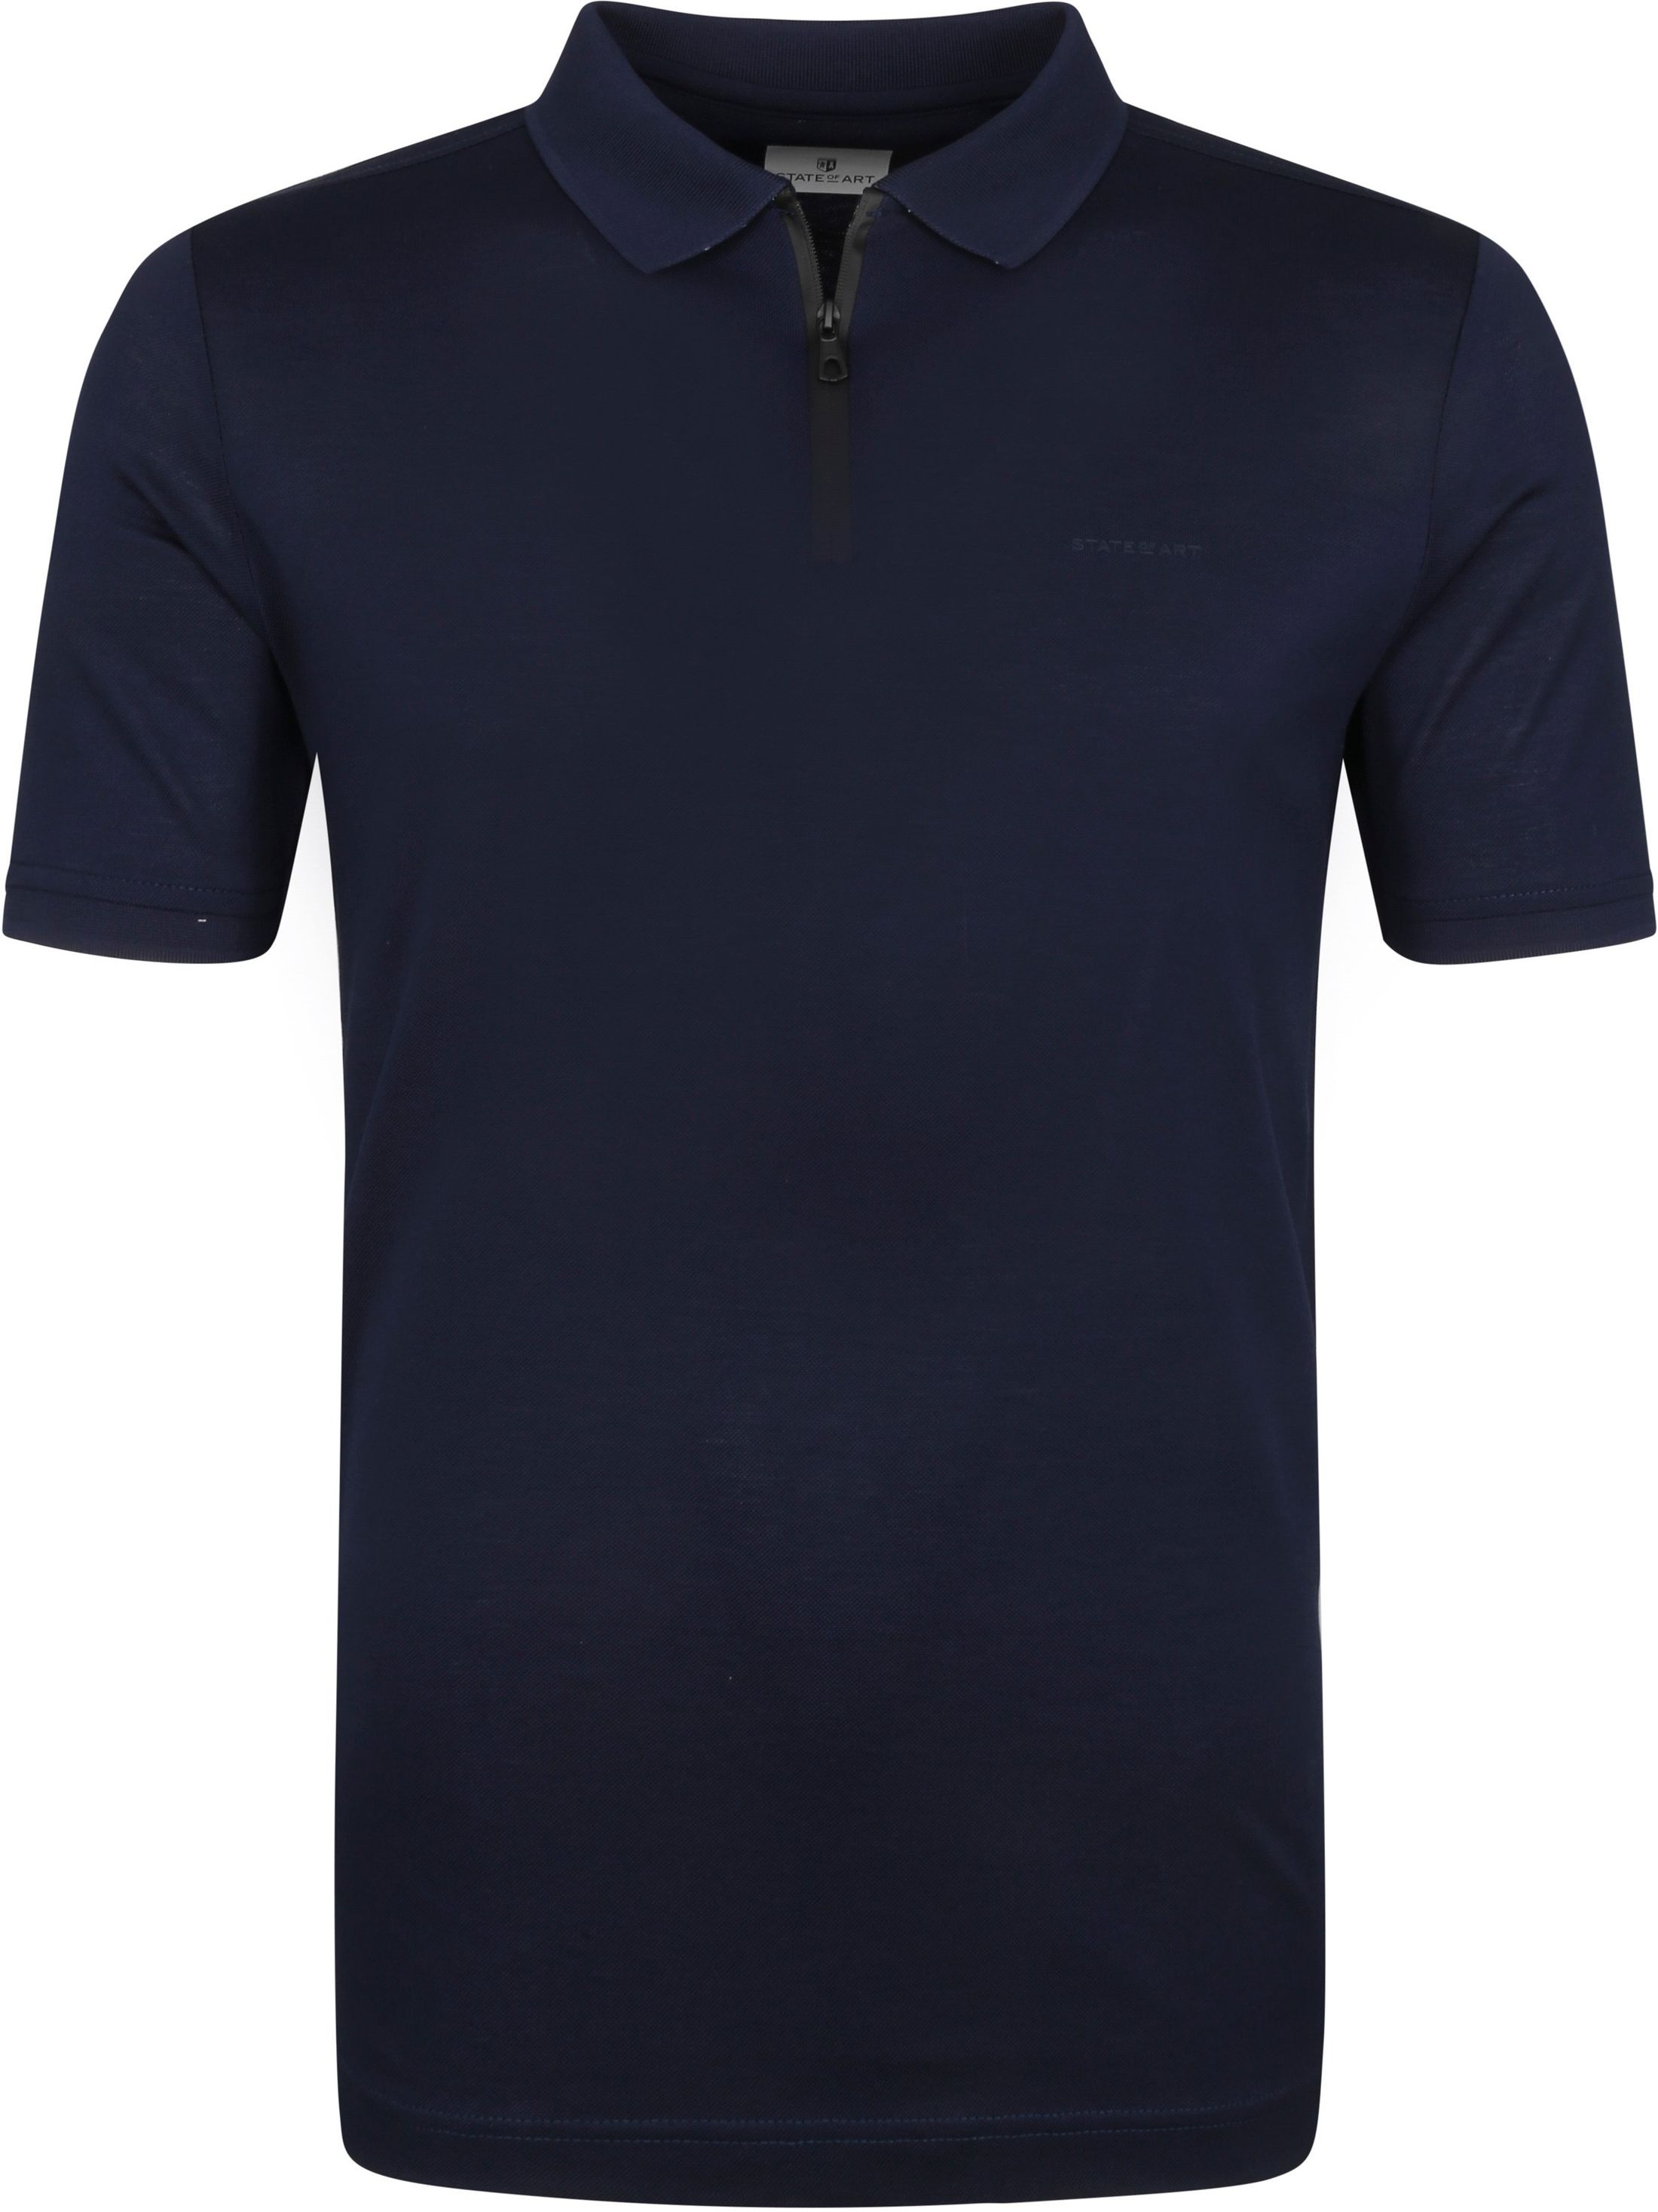 State Of Art Mercerized Pique Polo Shirt Zipper Dark Dark Blue Blue size L